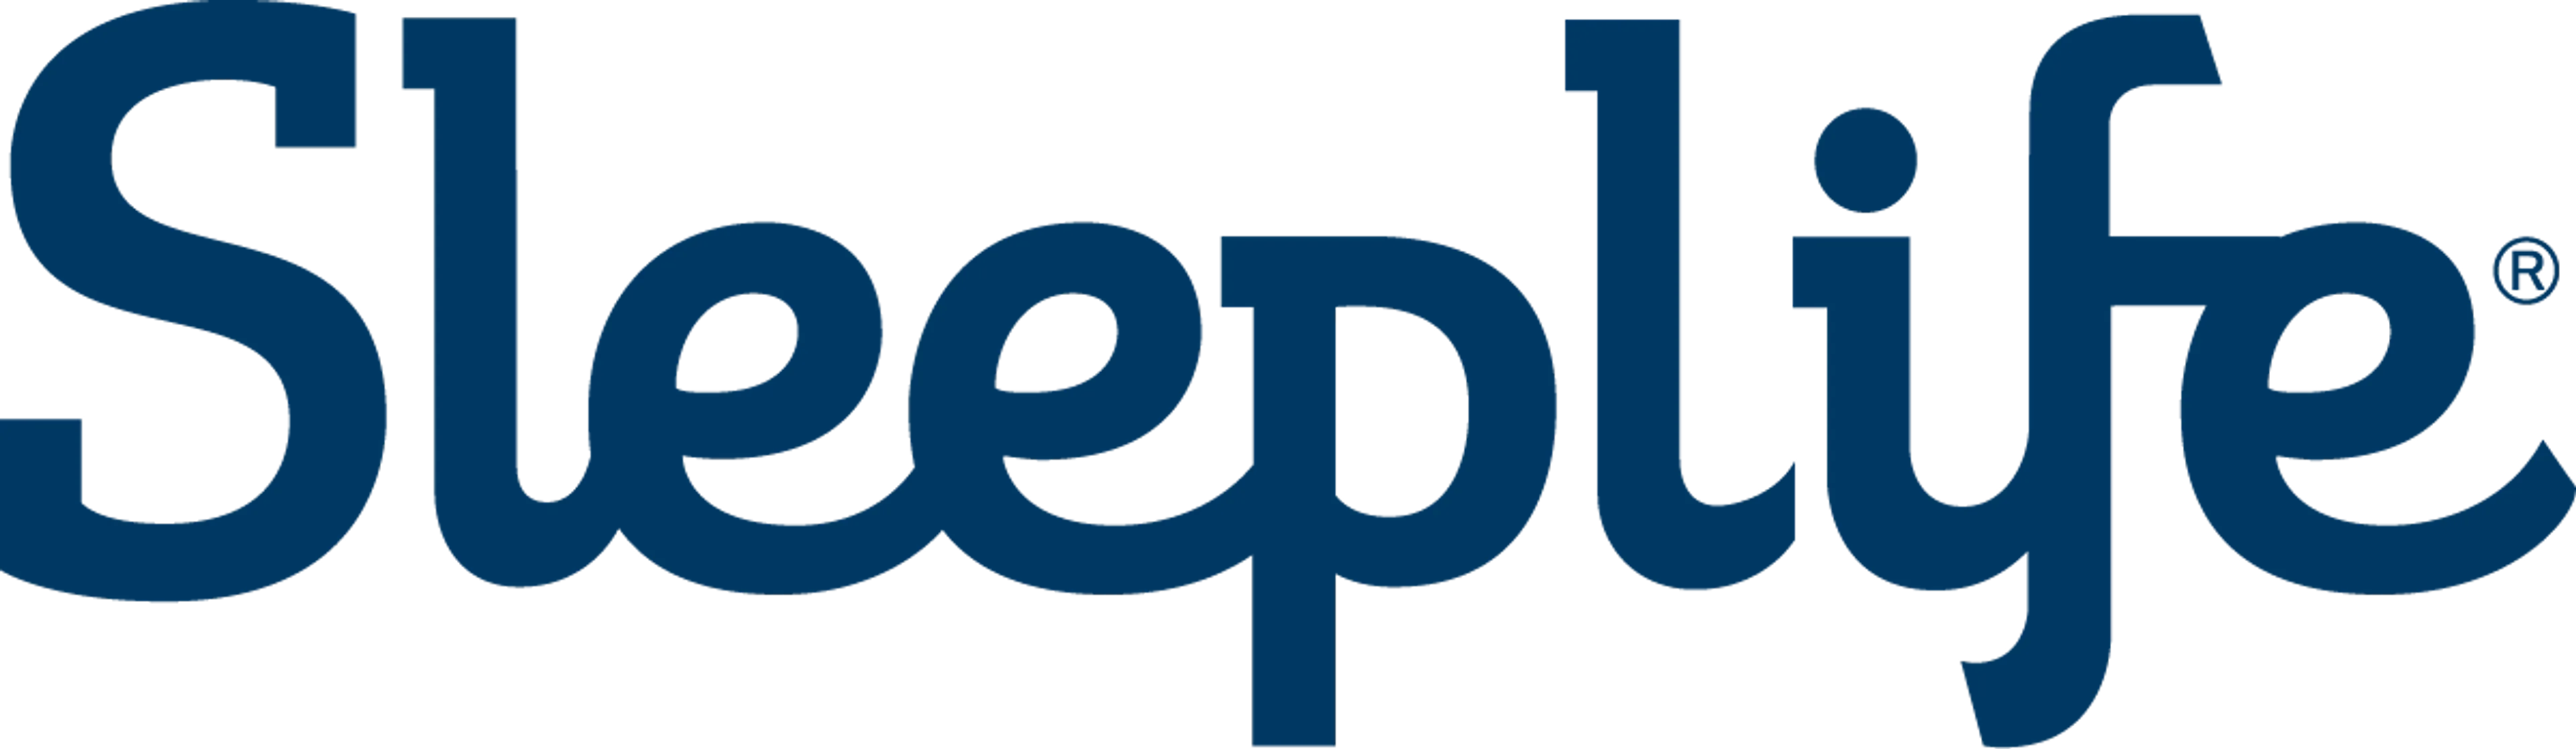 SLEEPLIFE logo